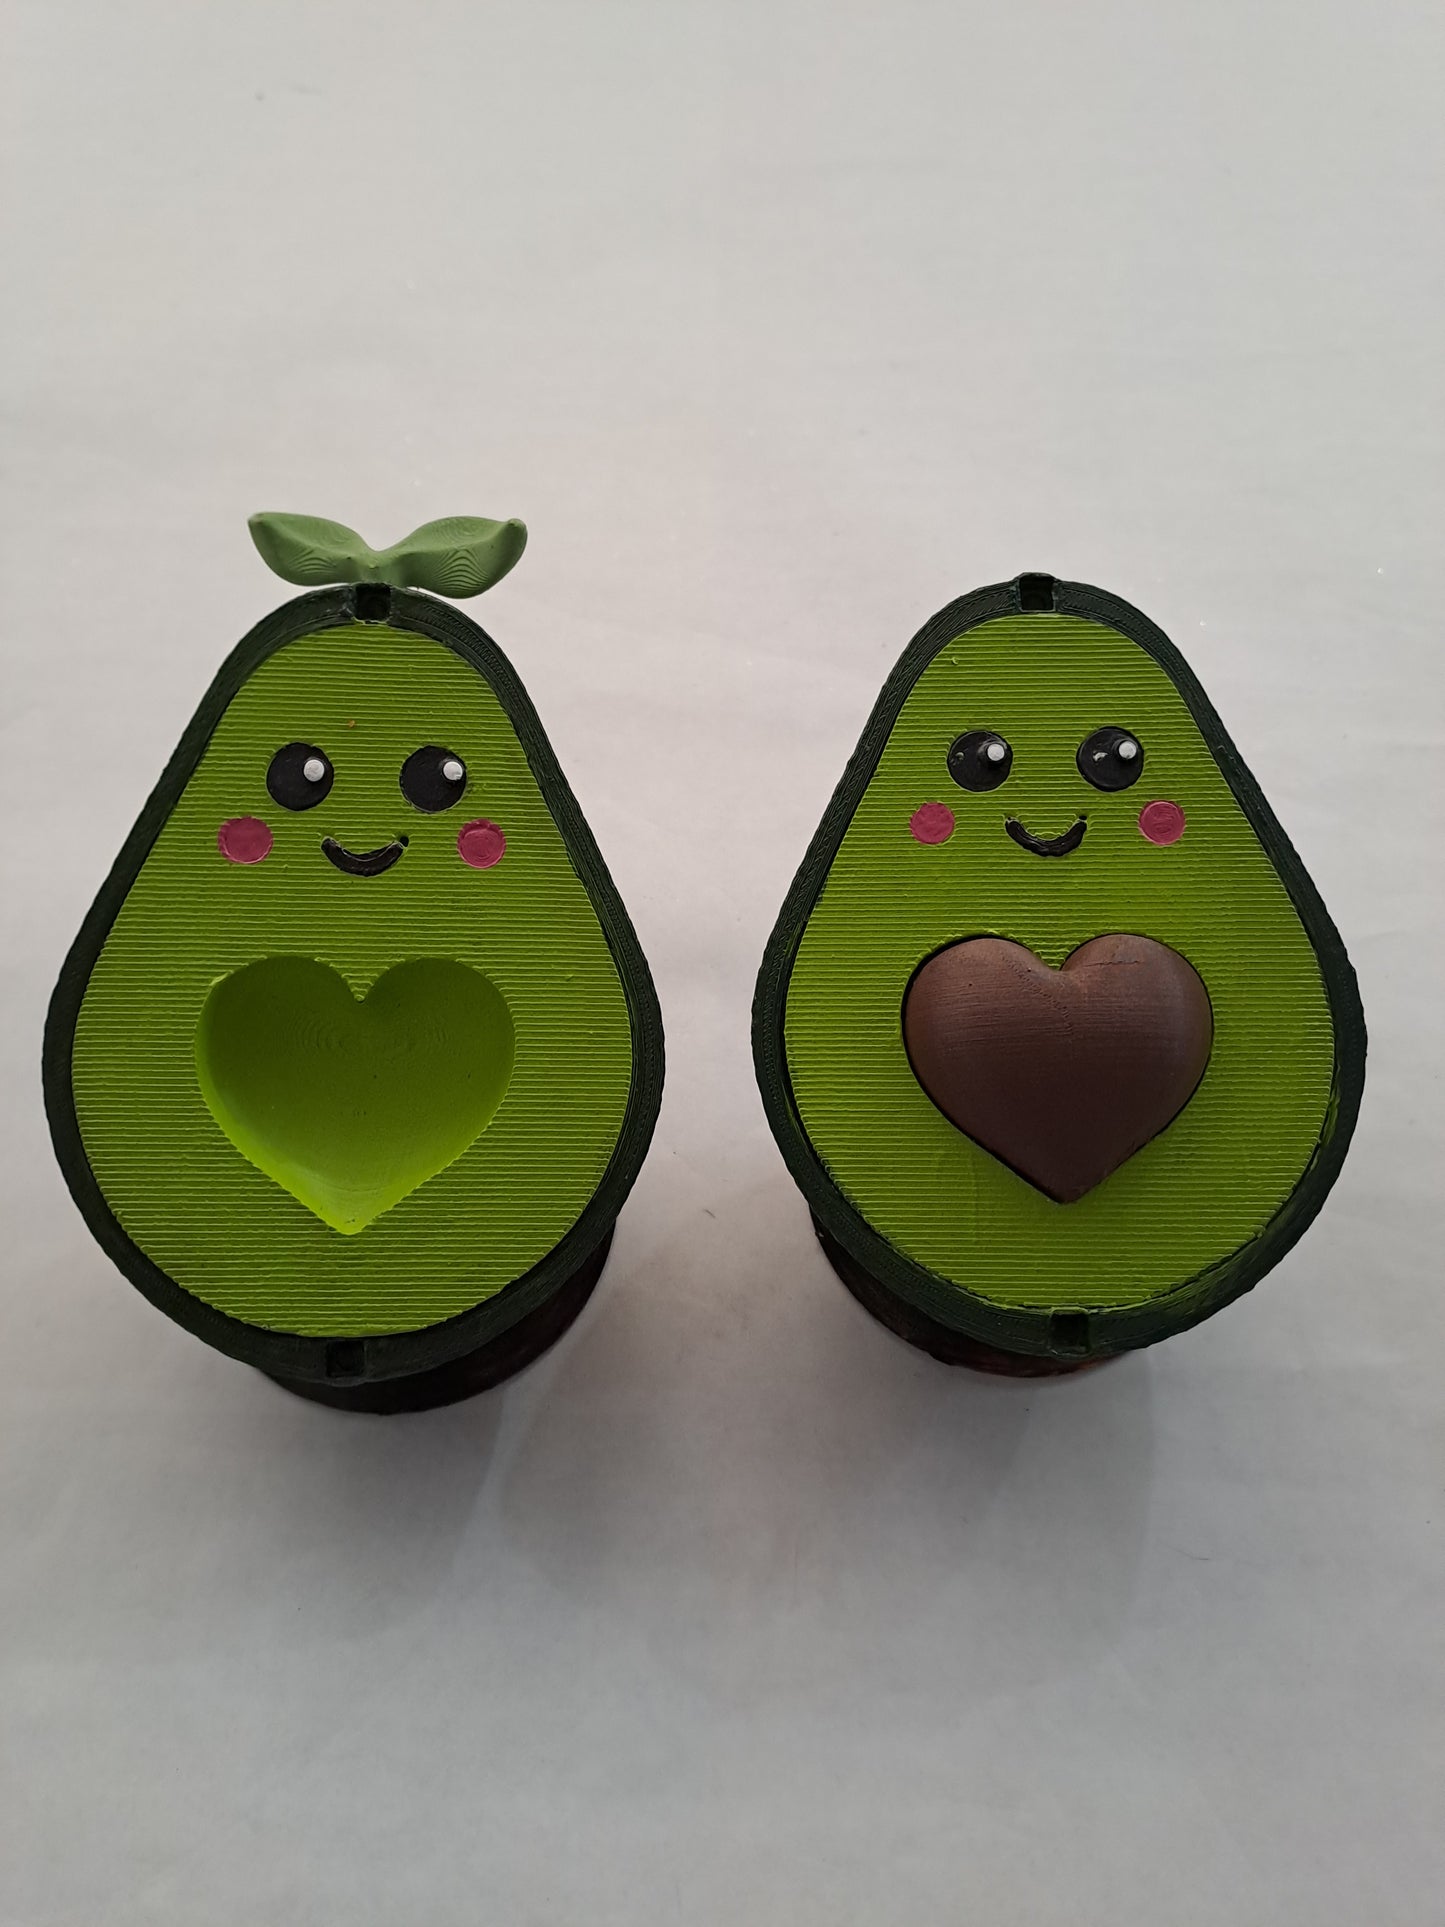 3D Printed Avocado Pear Set